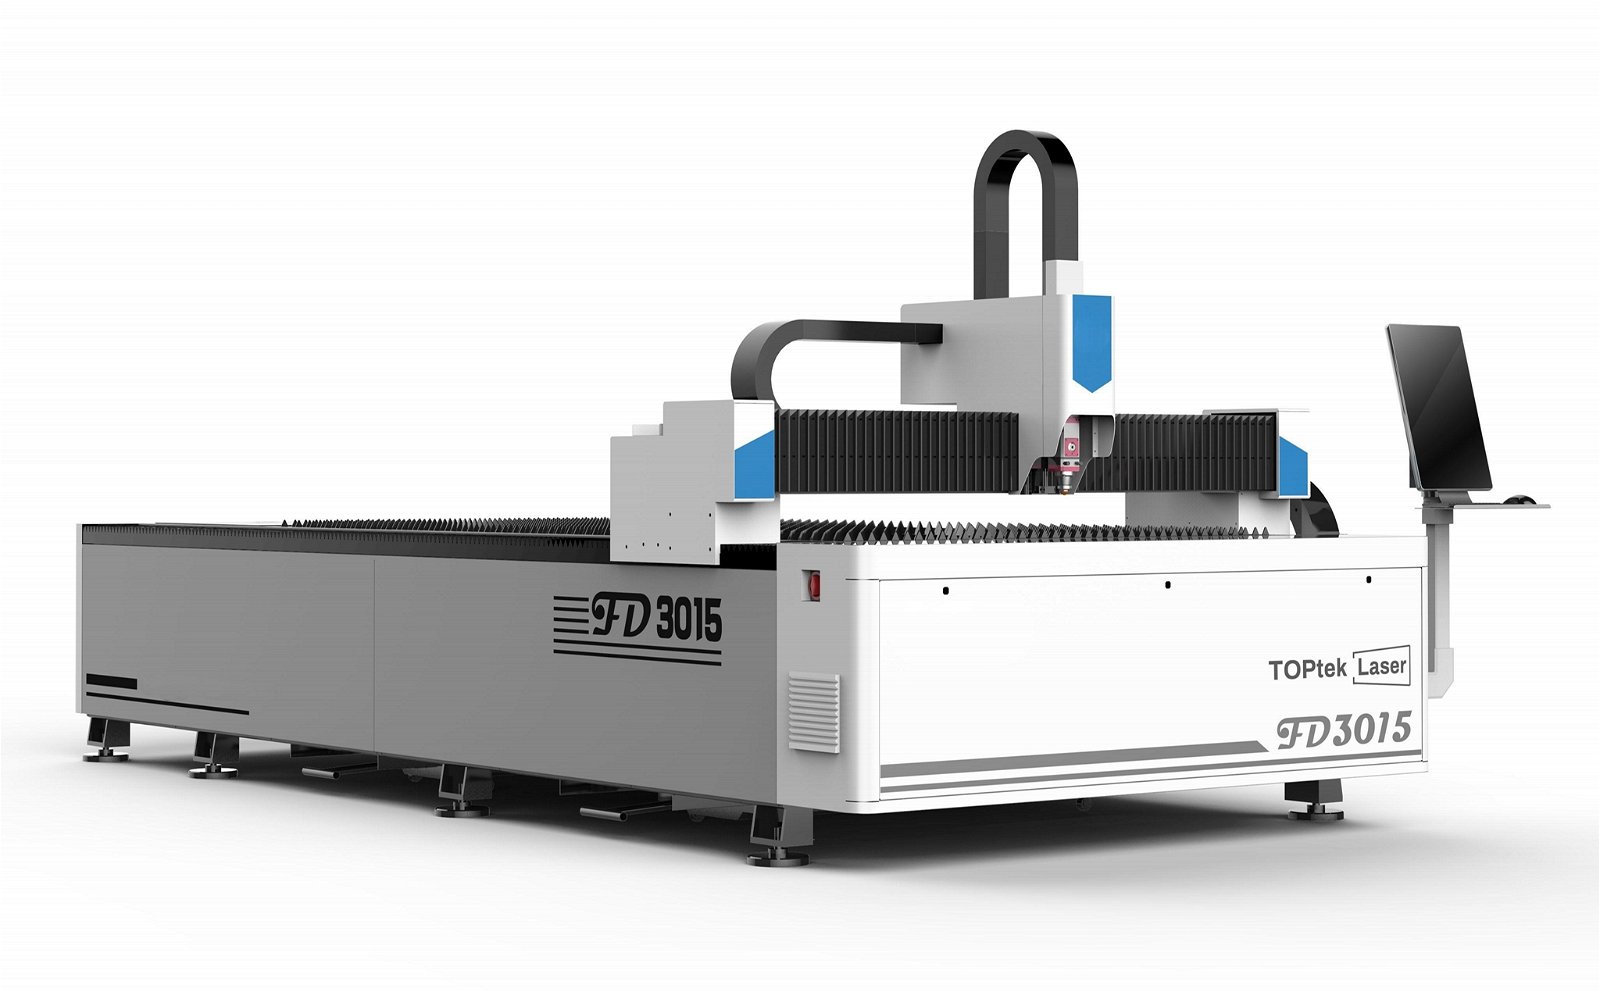 TOPtek Laser Cutting machine for sheet FD3015 4